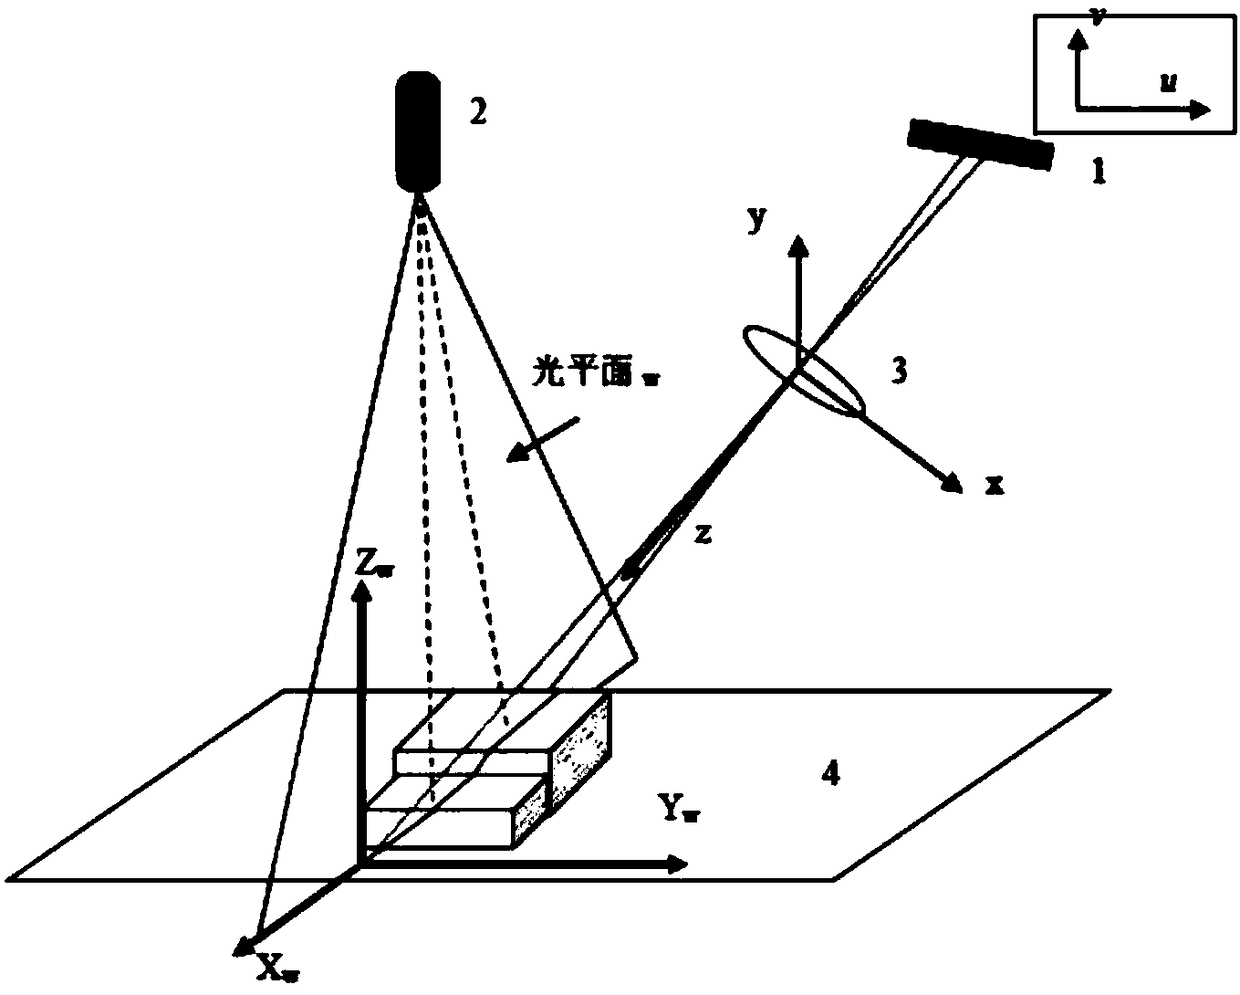 Machine vision technology-based laser structured light automatic calibration method